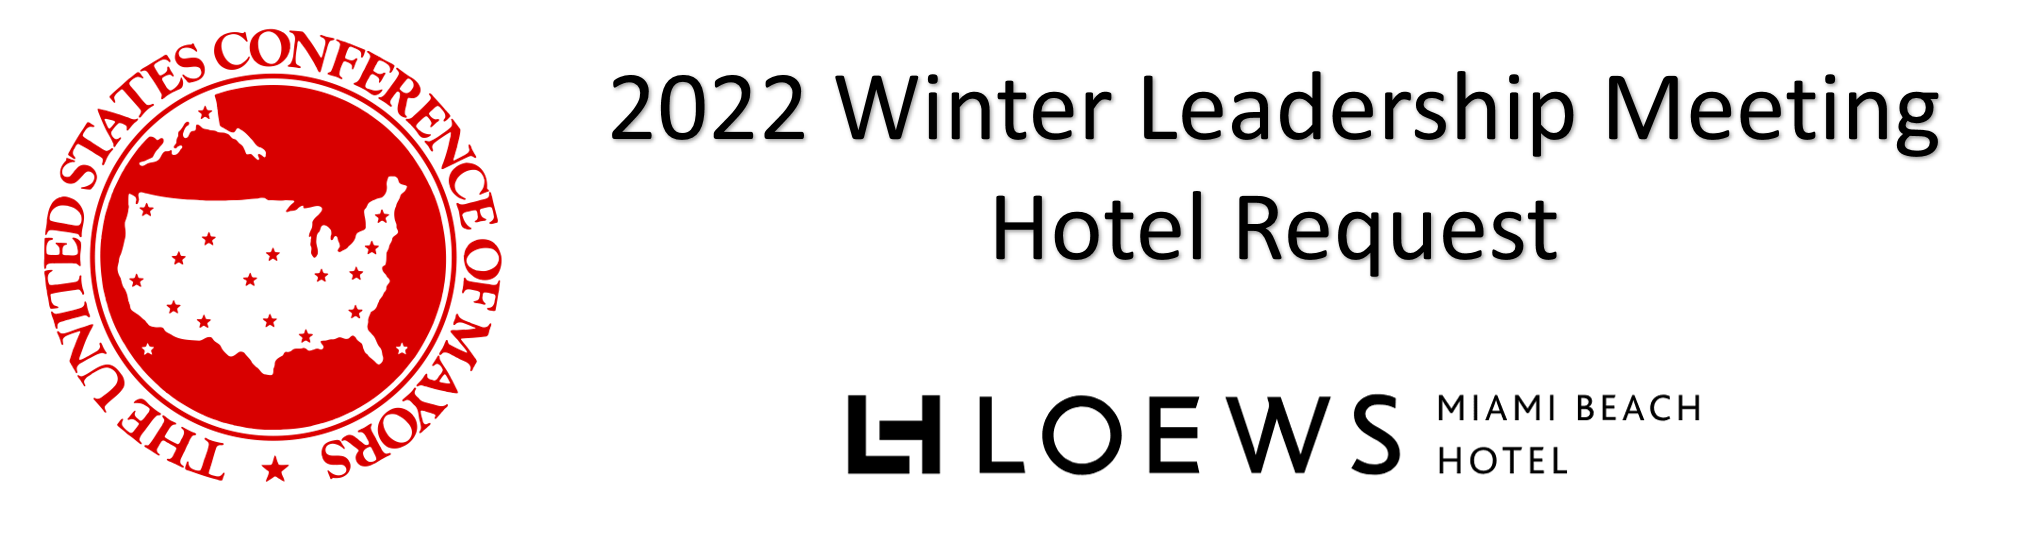 Banner - USCM Winter Leadership Hotel Request 2022